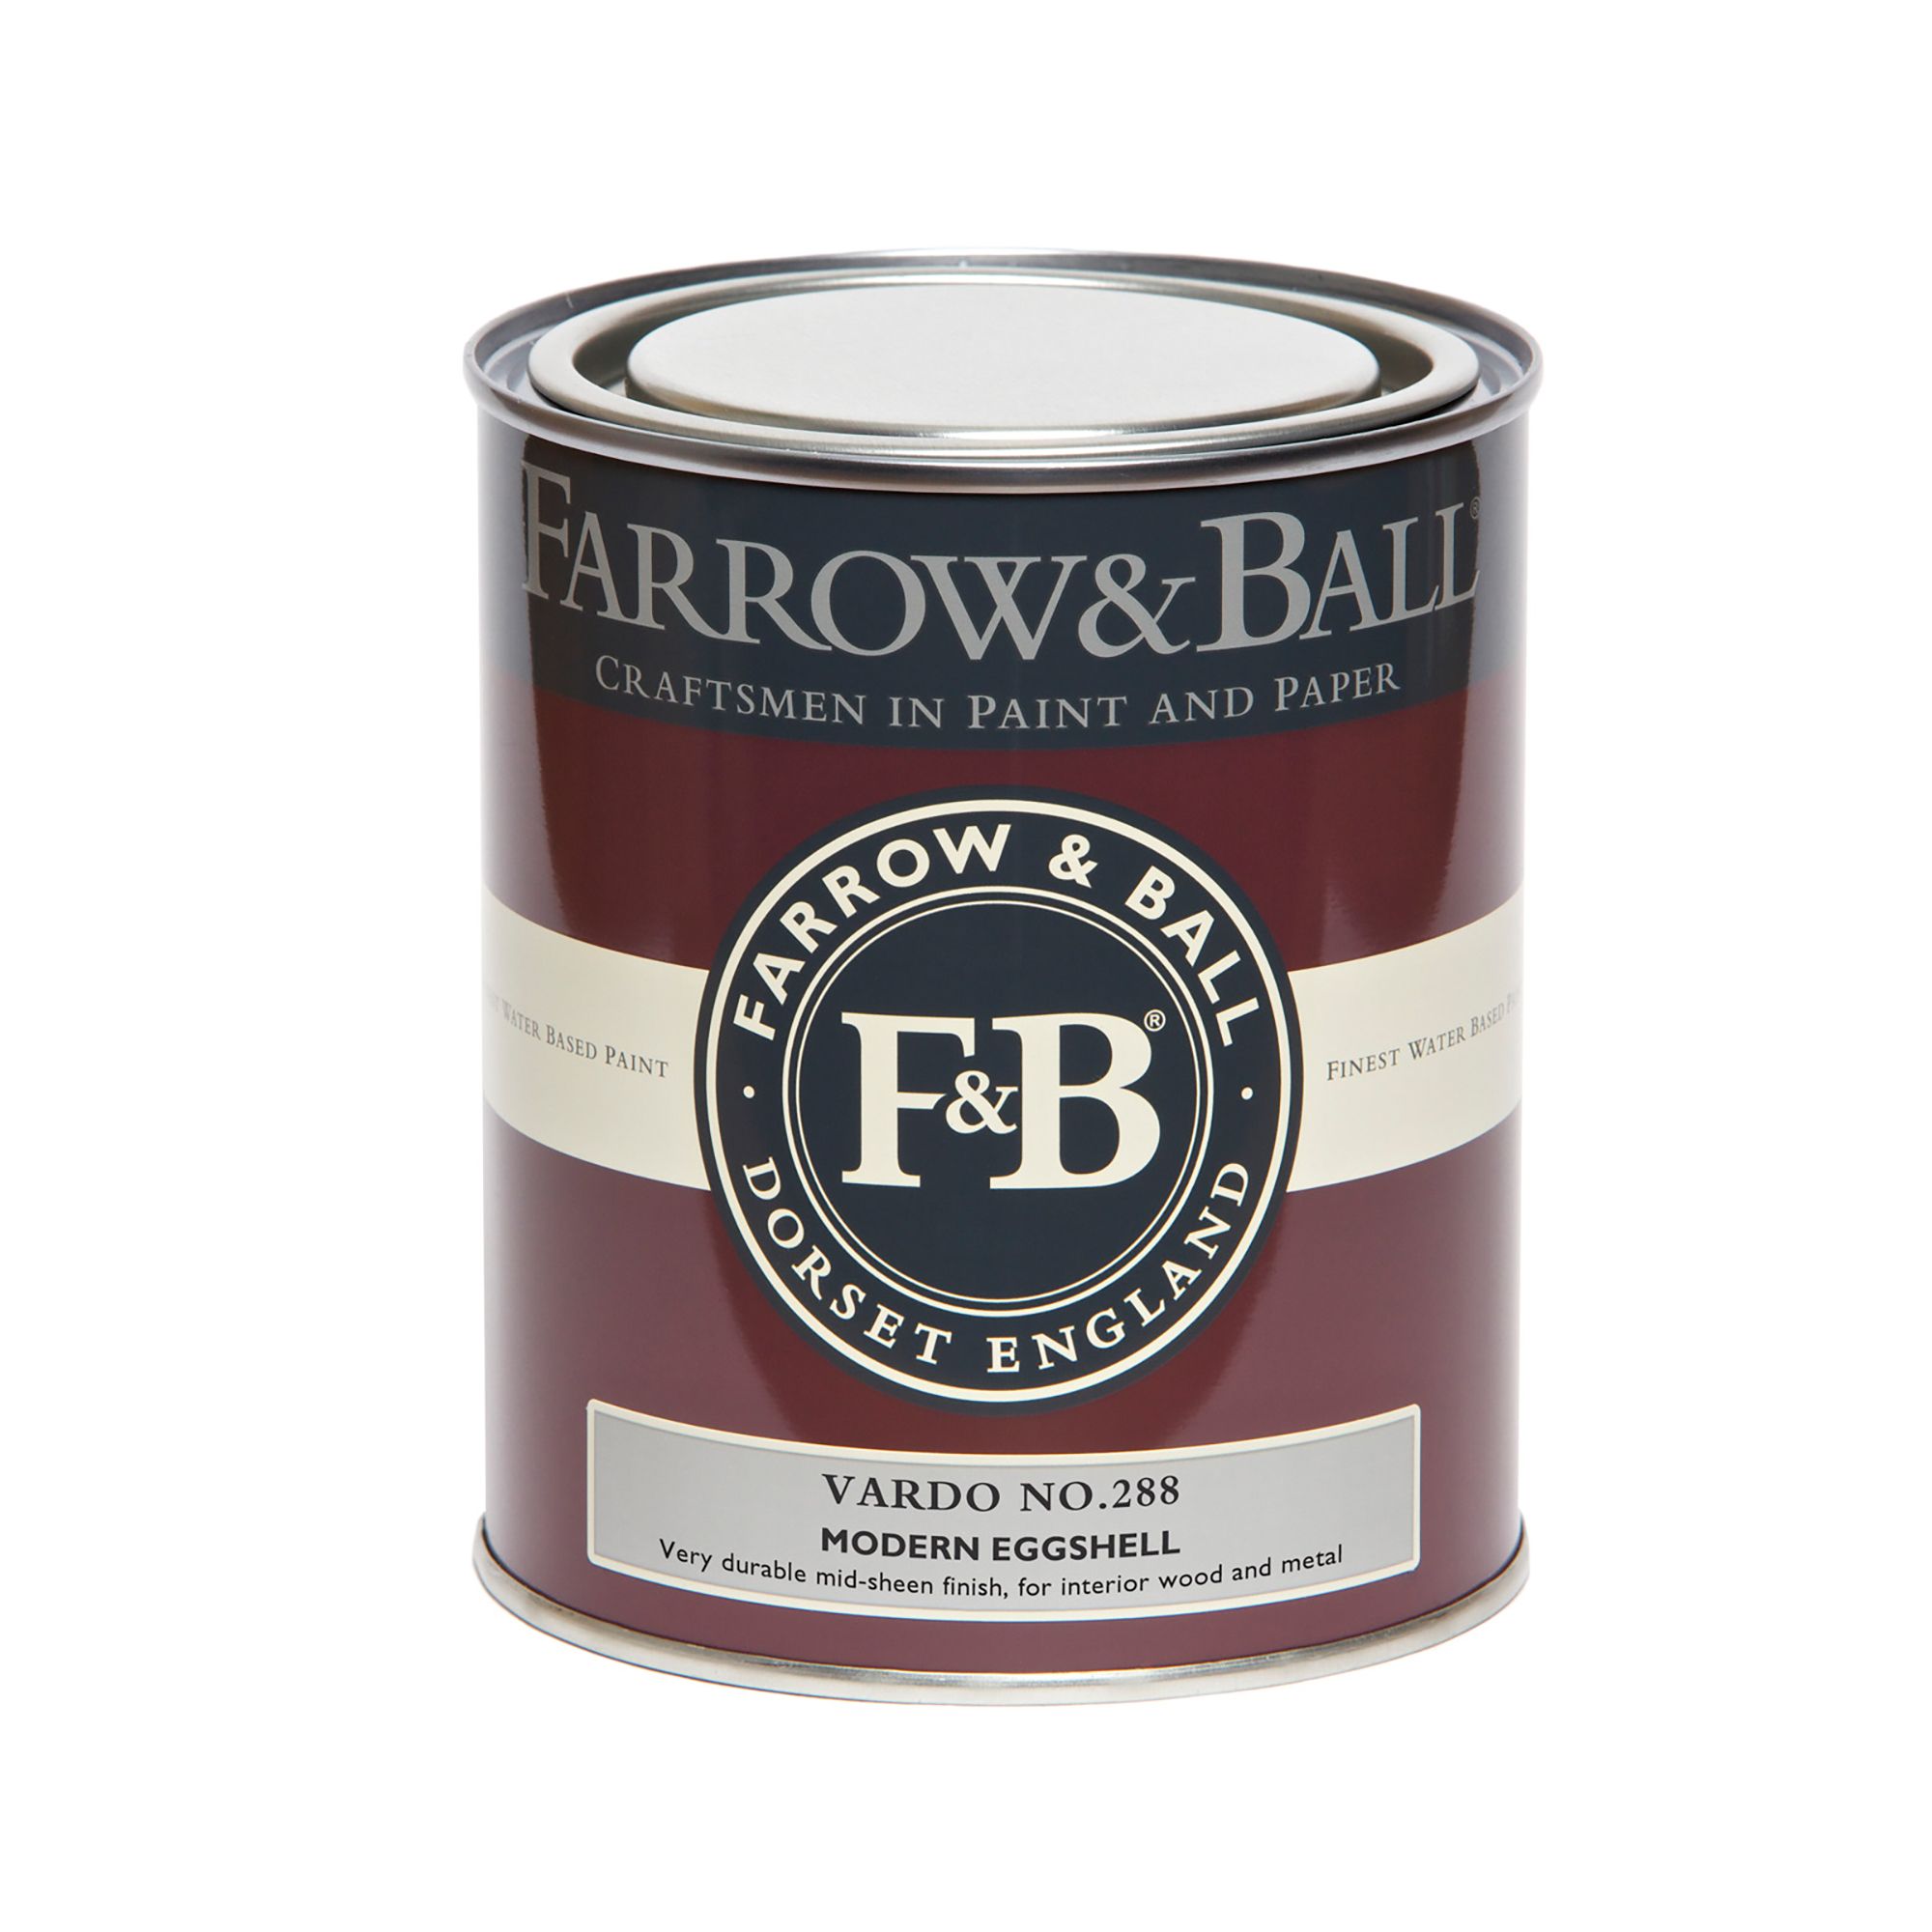 Farrow & Ball Modern Vardo No.288 Eggshell Paint, 750ml